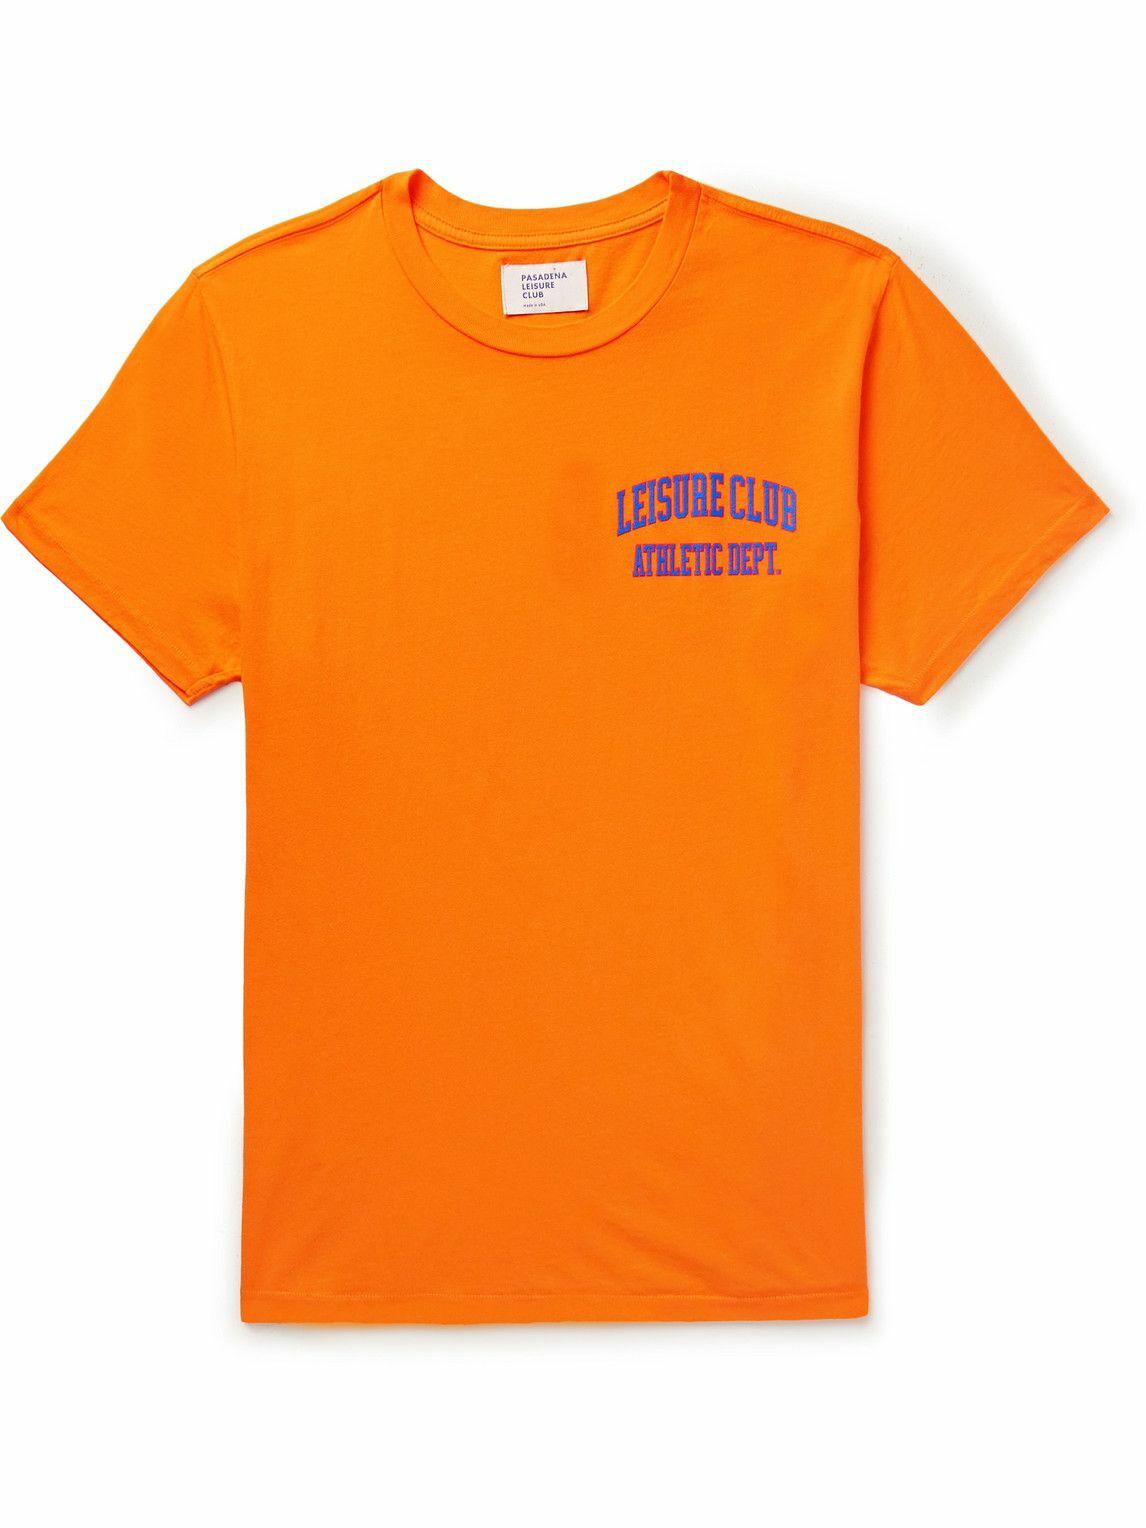 Photo: Pasadena Leisure Club - Athletic Dept. Logo-Print Garment-Dyed Cotton-Jersey T-Shirt - Orange